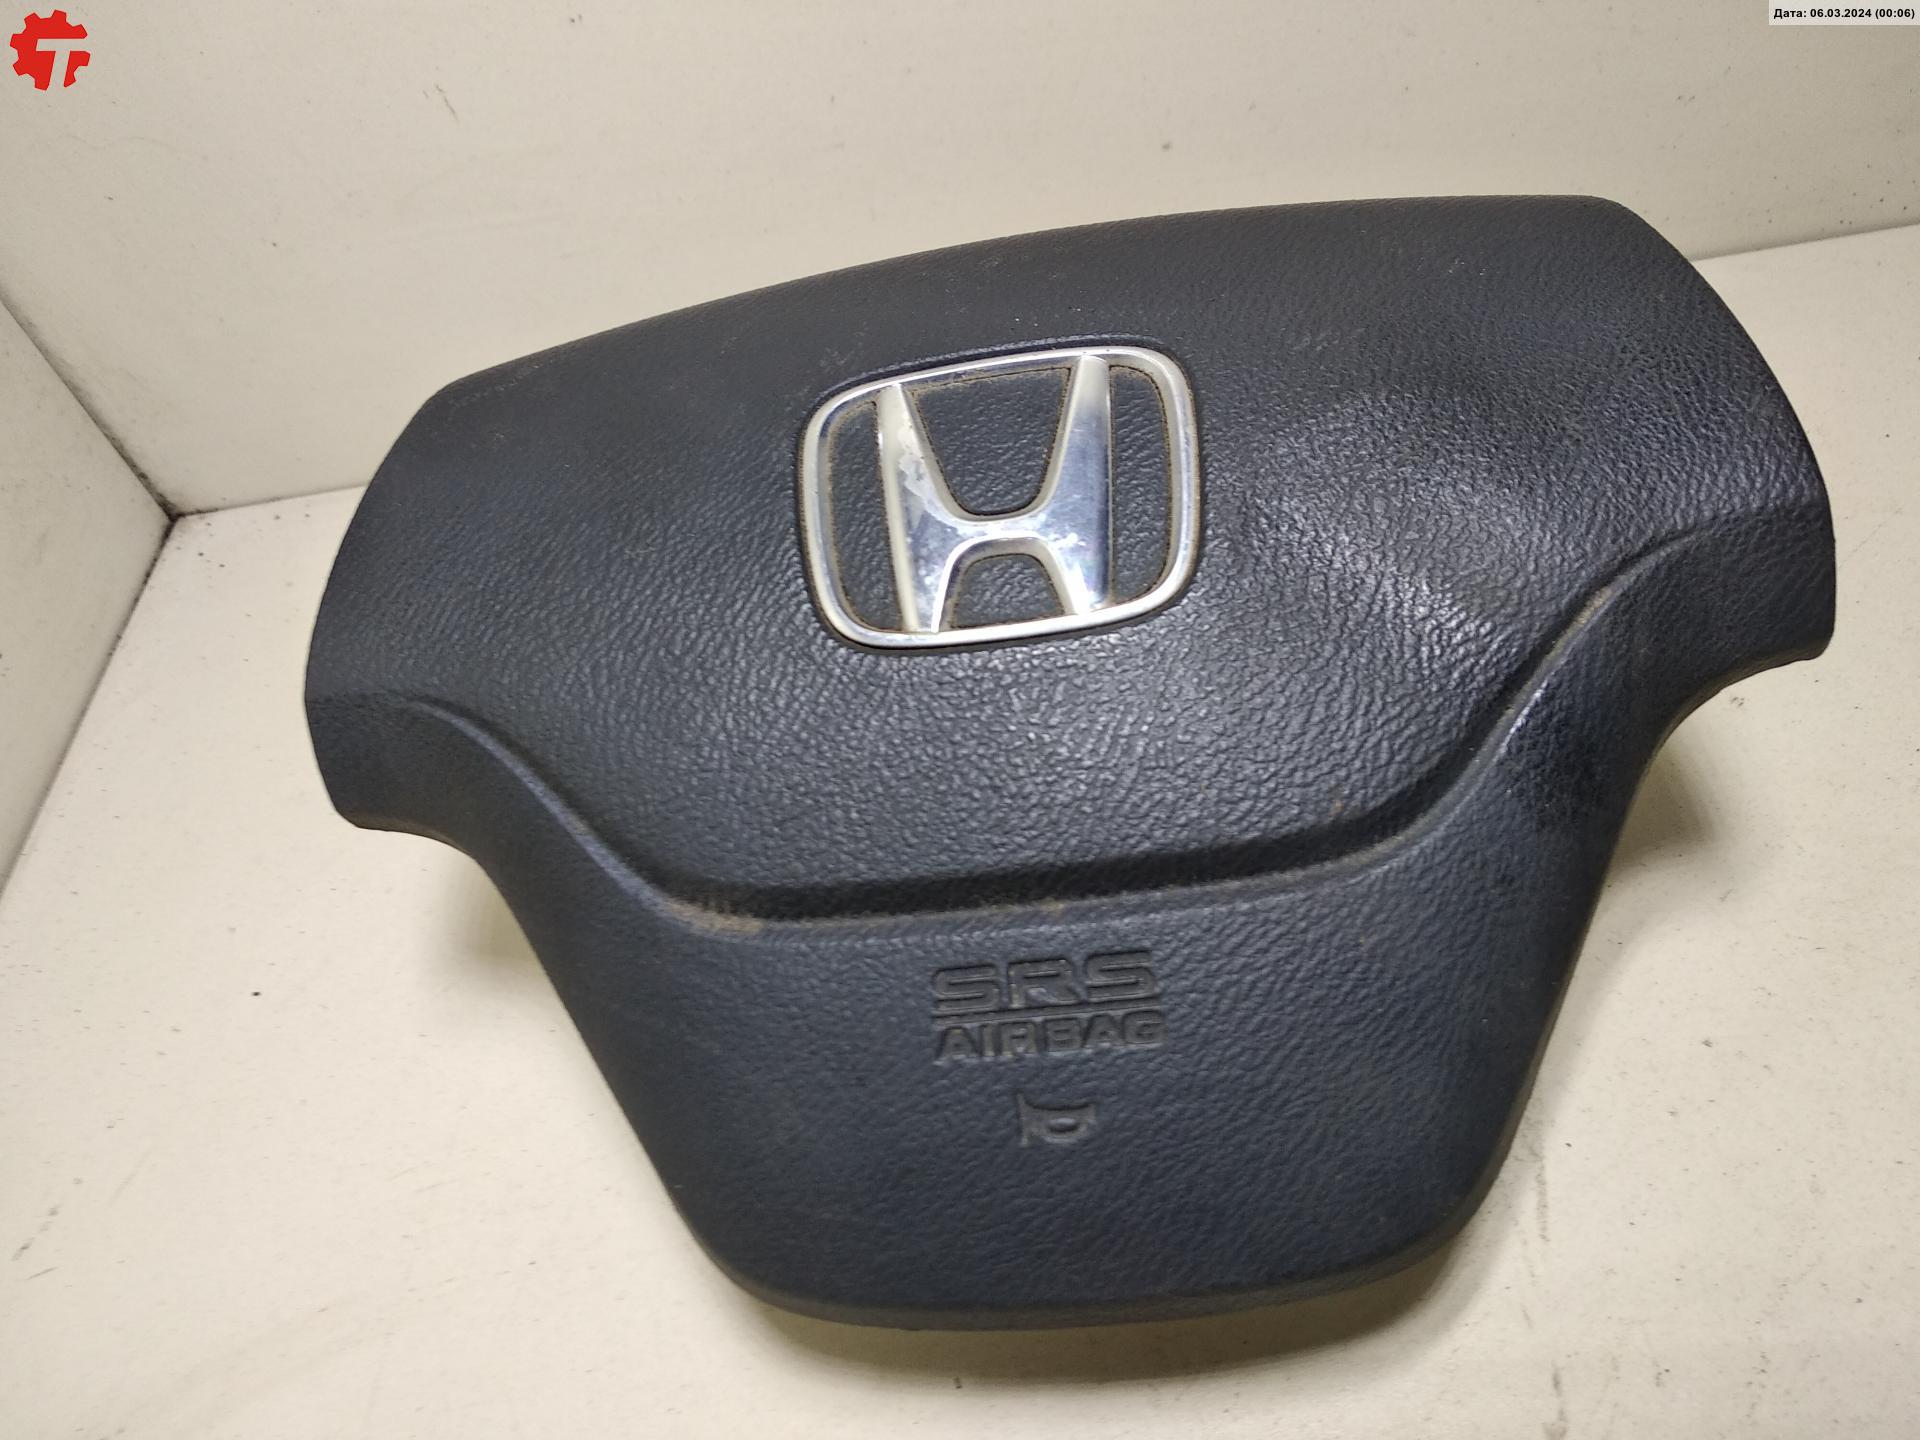 Подушка безопасности (Airbag) водителя - Honda CR-V (2007-2017)